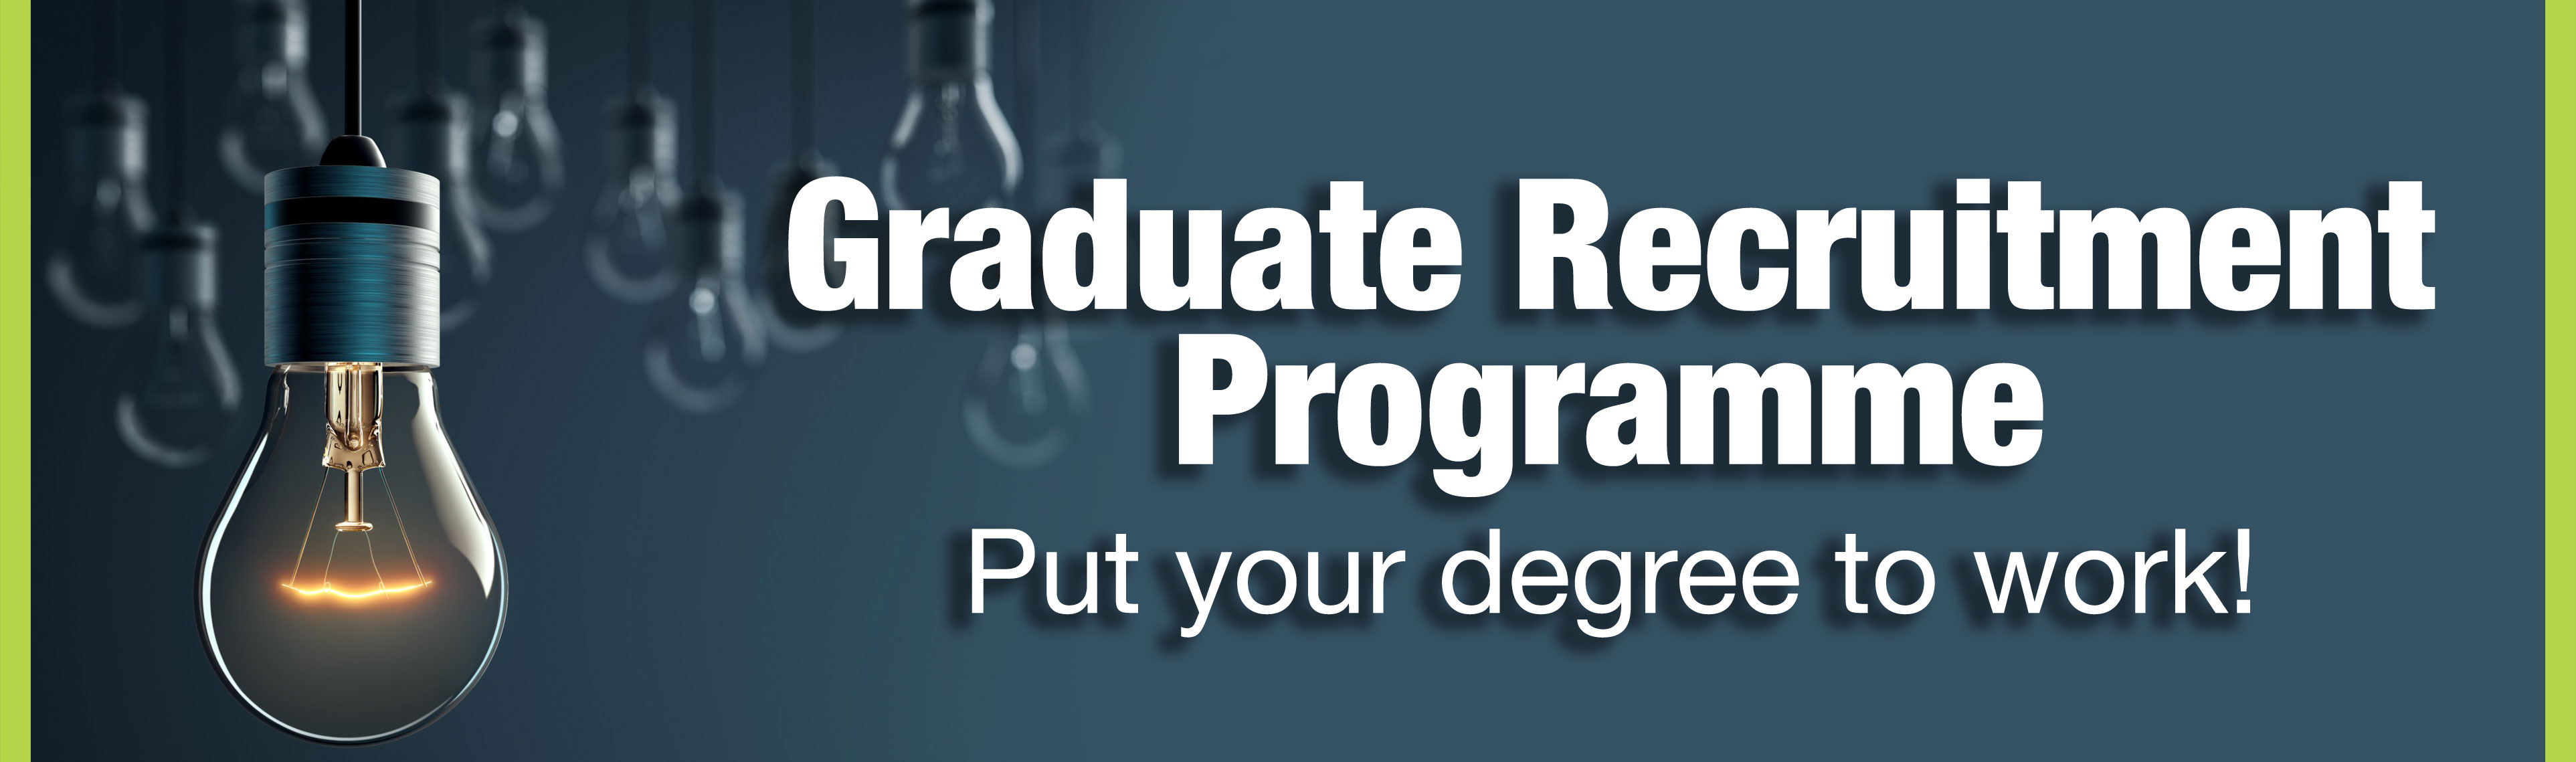 Graduate Recruitment Programme